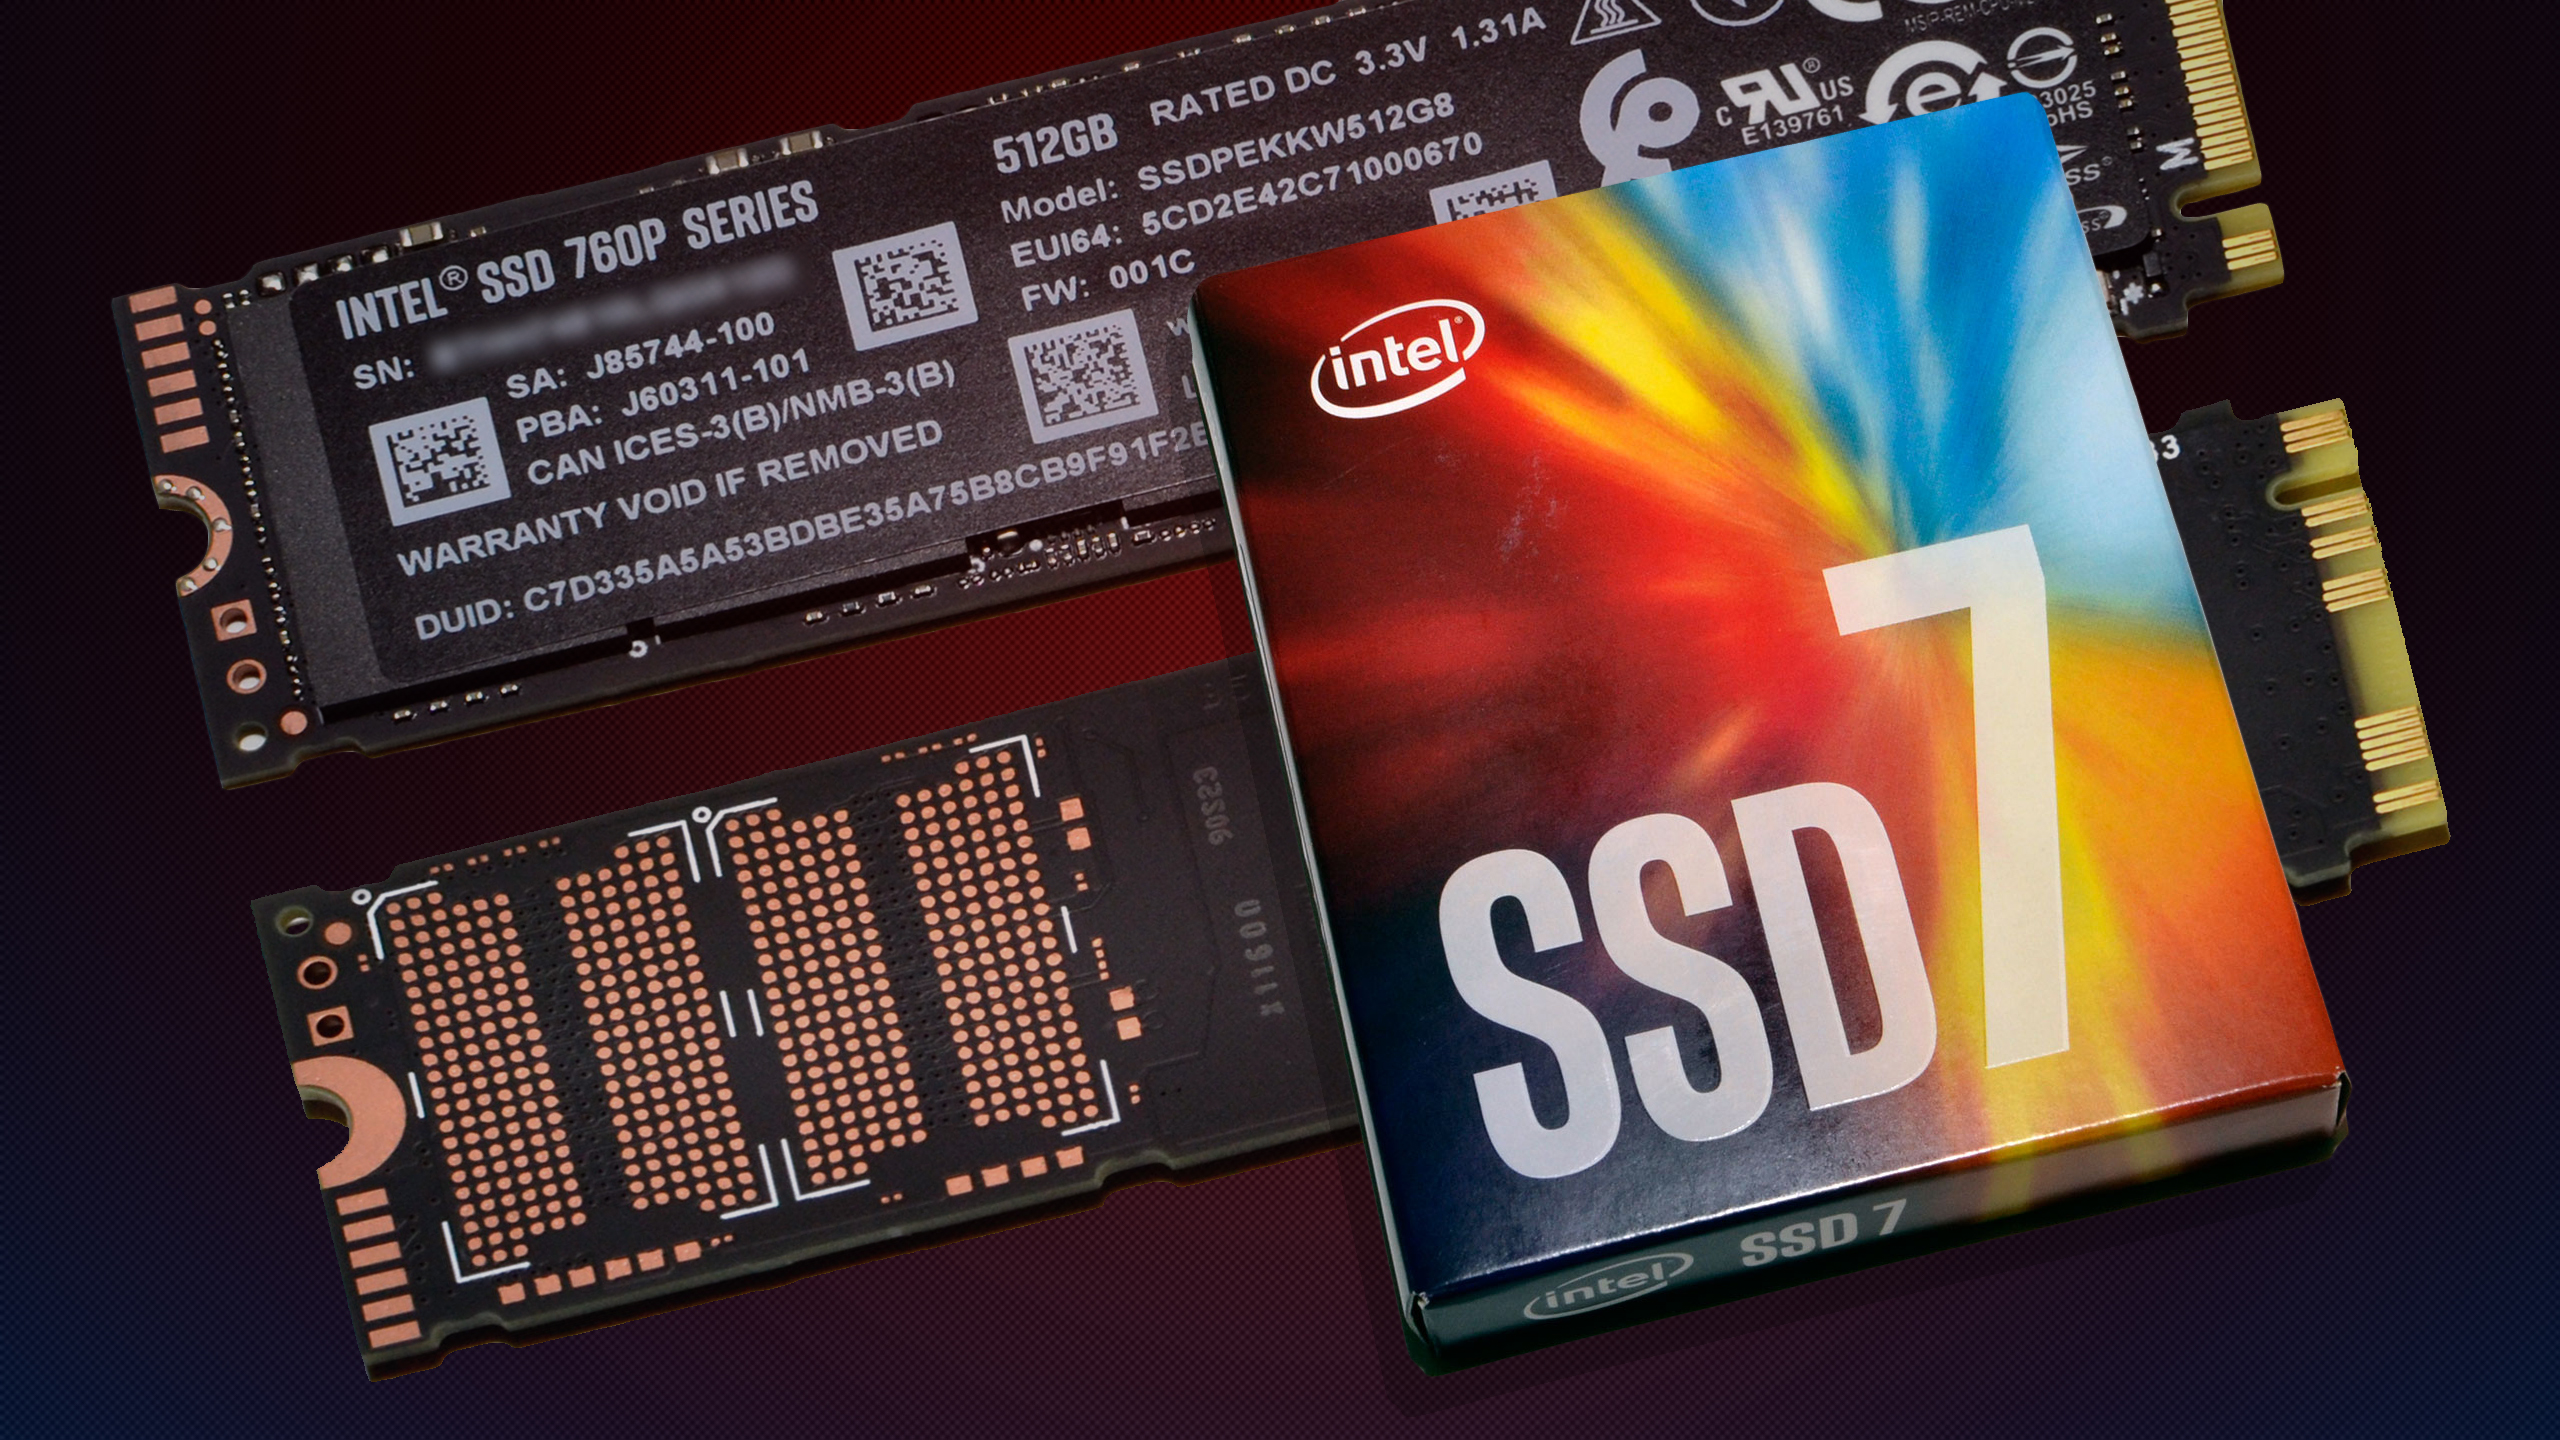 kazanan hazne Suçluluk duygusu  Intel's SSD 760p is an excellent budget NVMe drive | PC Gamer